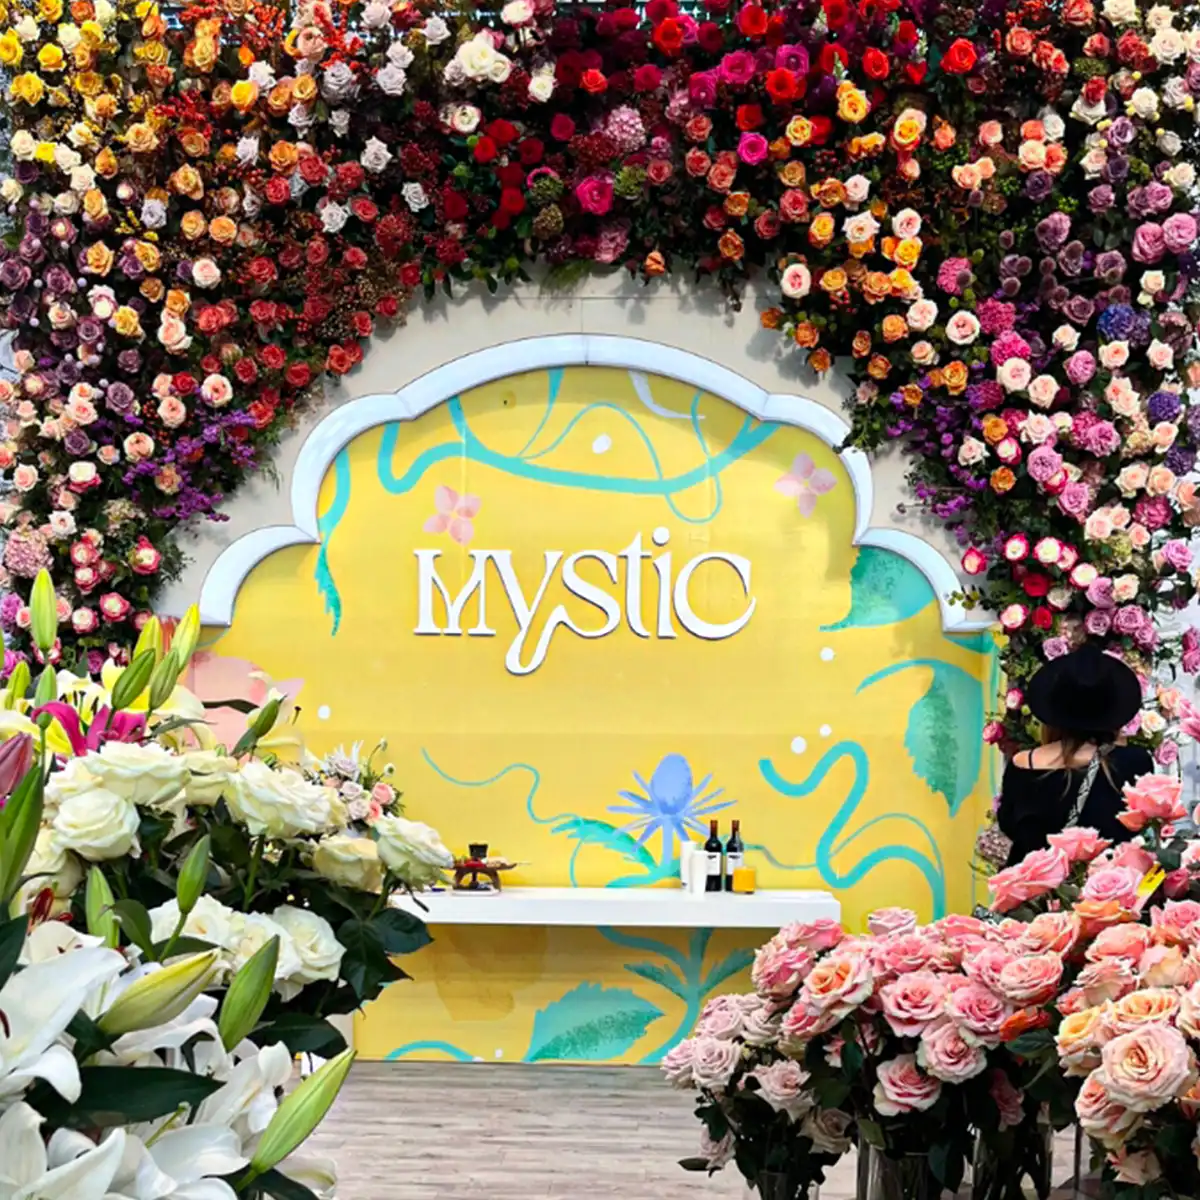 the-ecuadorian-flower-company-that-is-inspiring-worldwide-featured